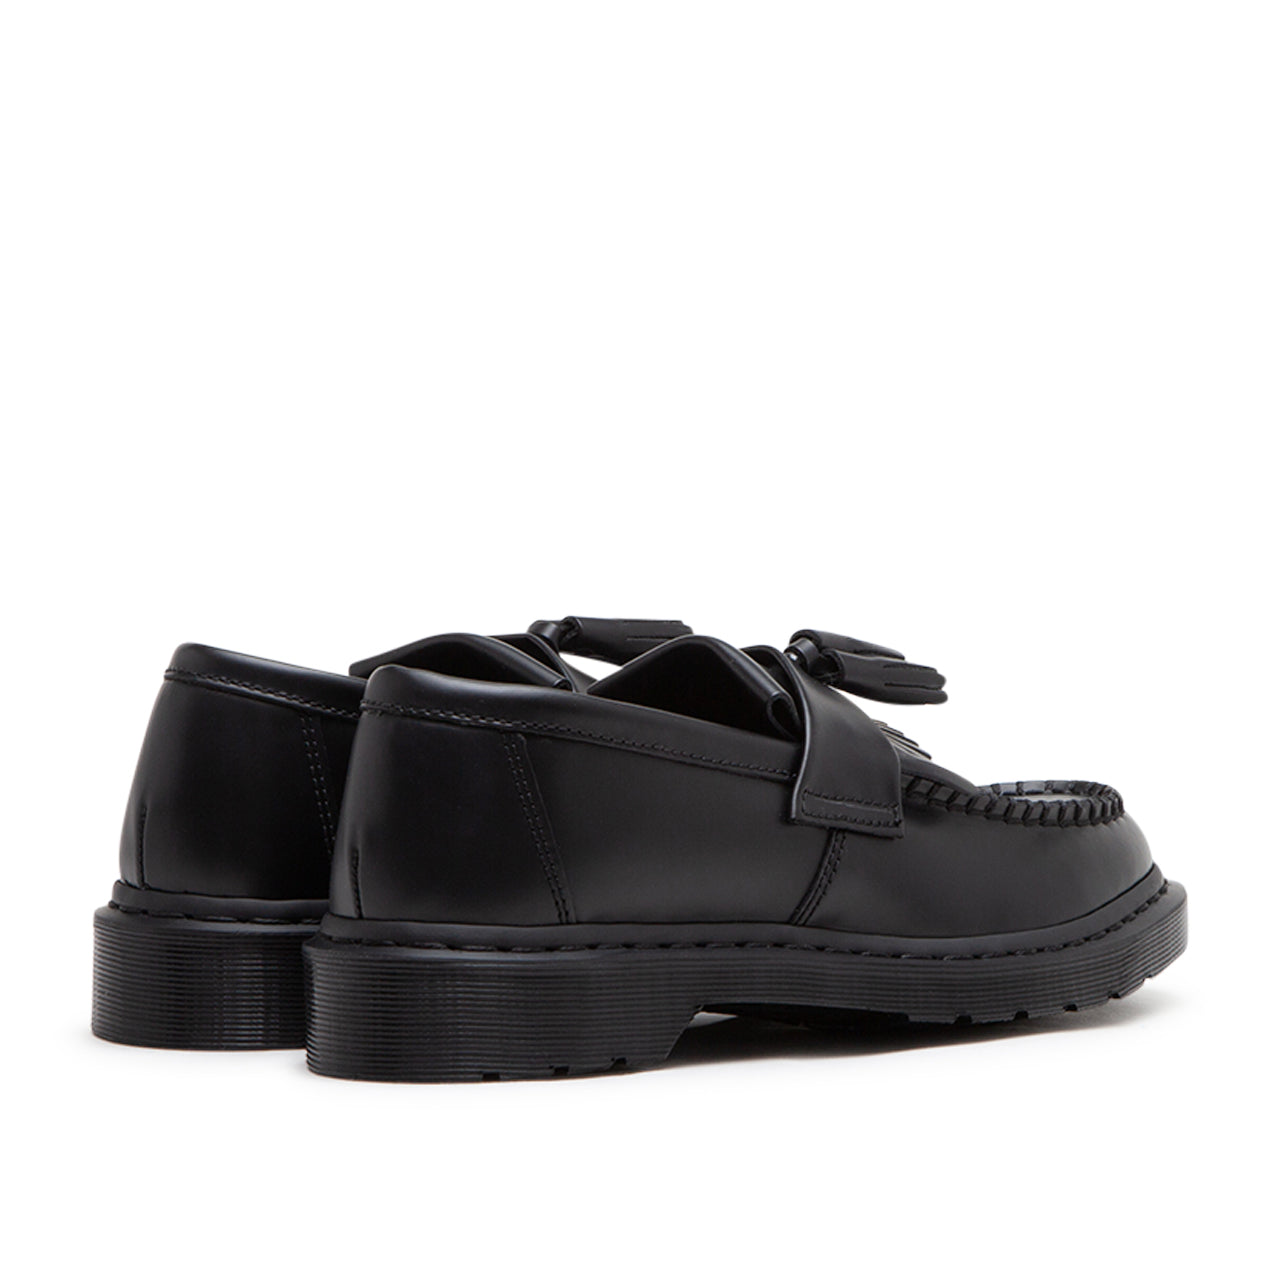 Dr. Martens Adrian Mono Leather Loafers (Schwarz)  - Cheap Juzsports Jordan Outlet